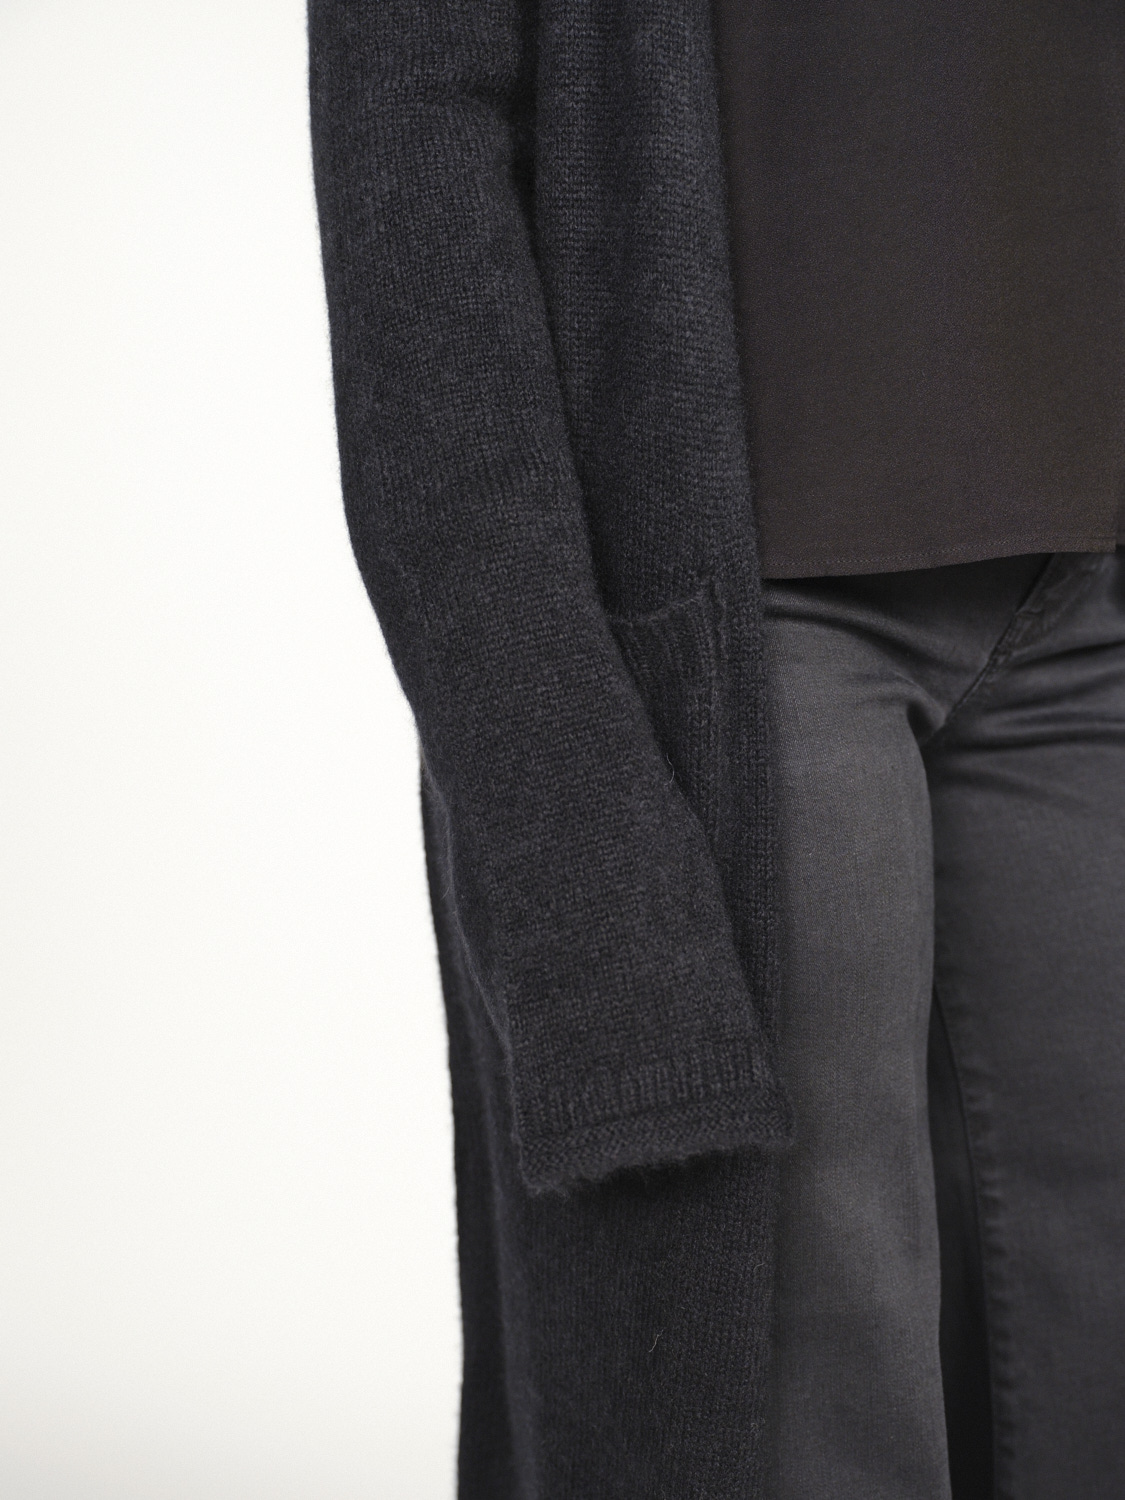 Antonia Zander Nuri - Oversized cardigan in cashmere black M